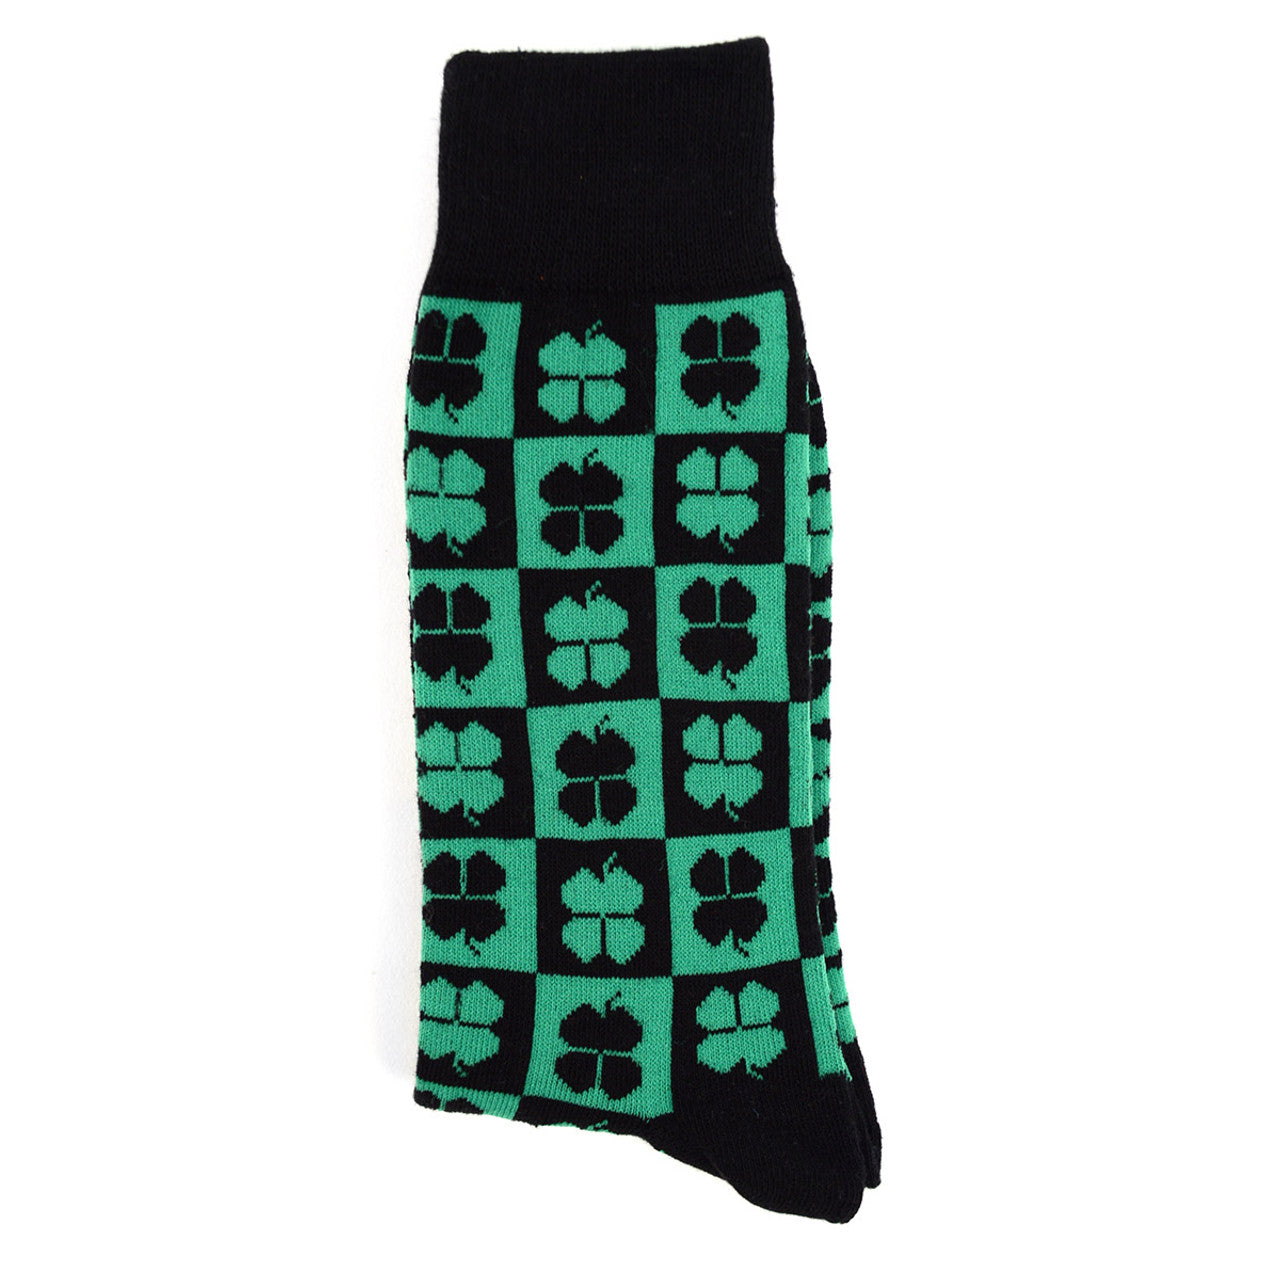 Mens Four Leaf Clover Socks - St. Patricks Day Socks